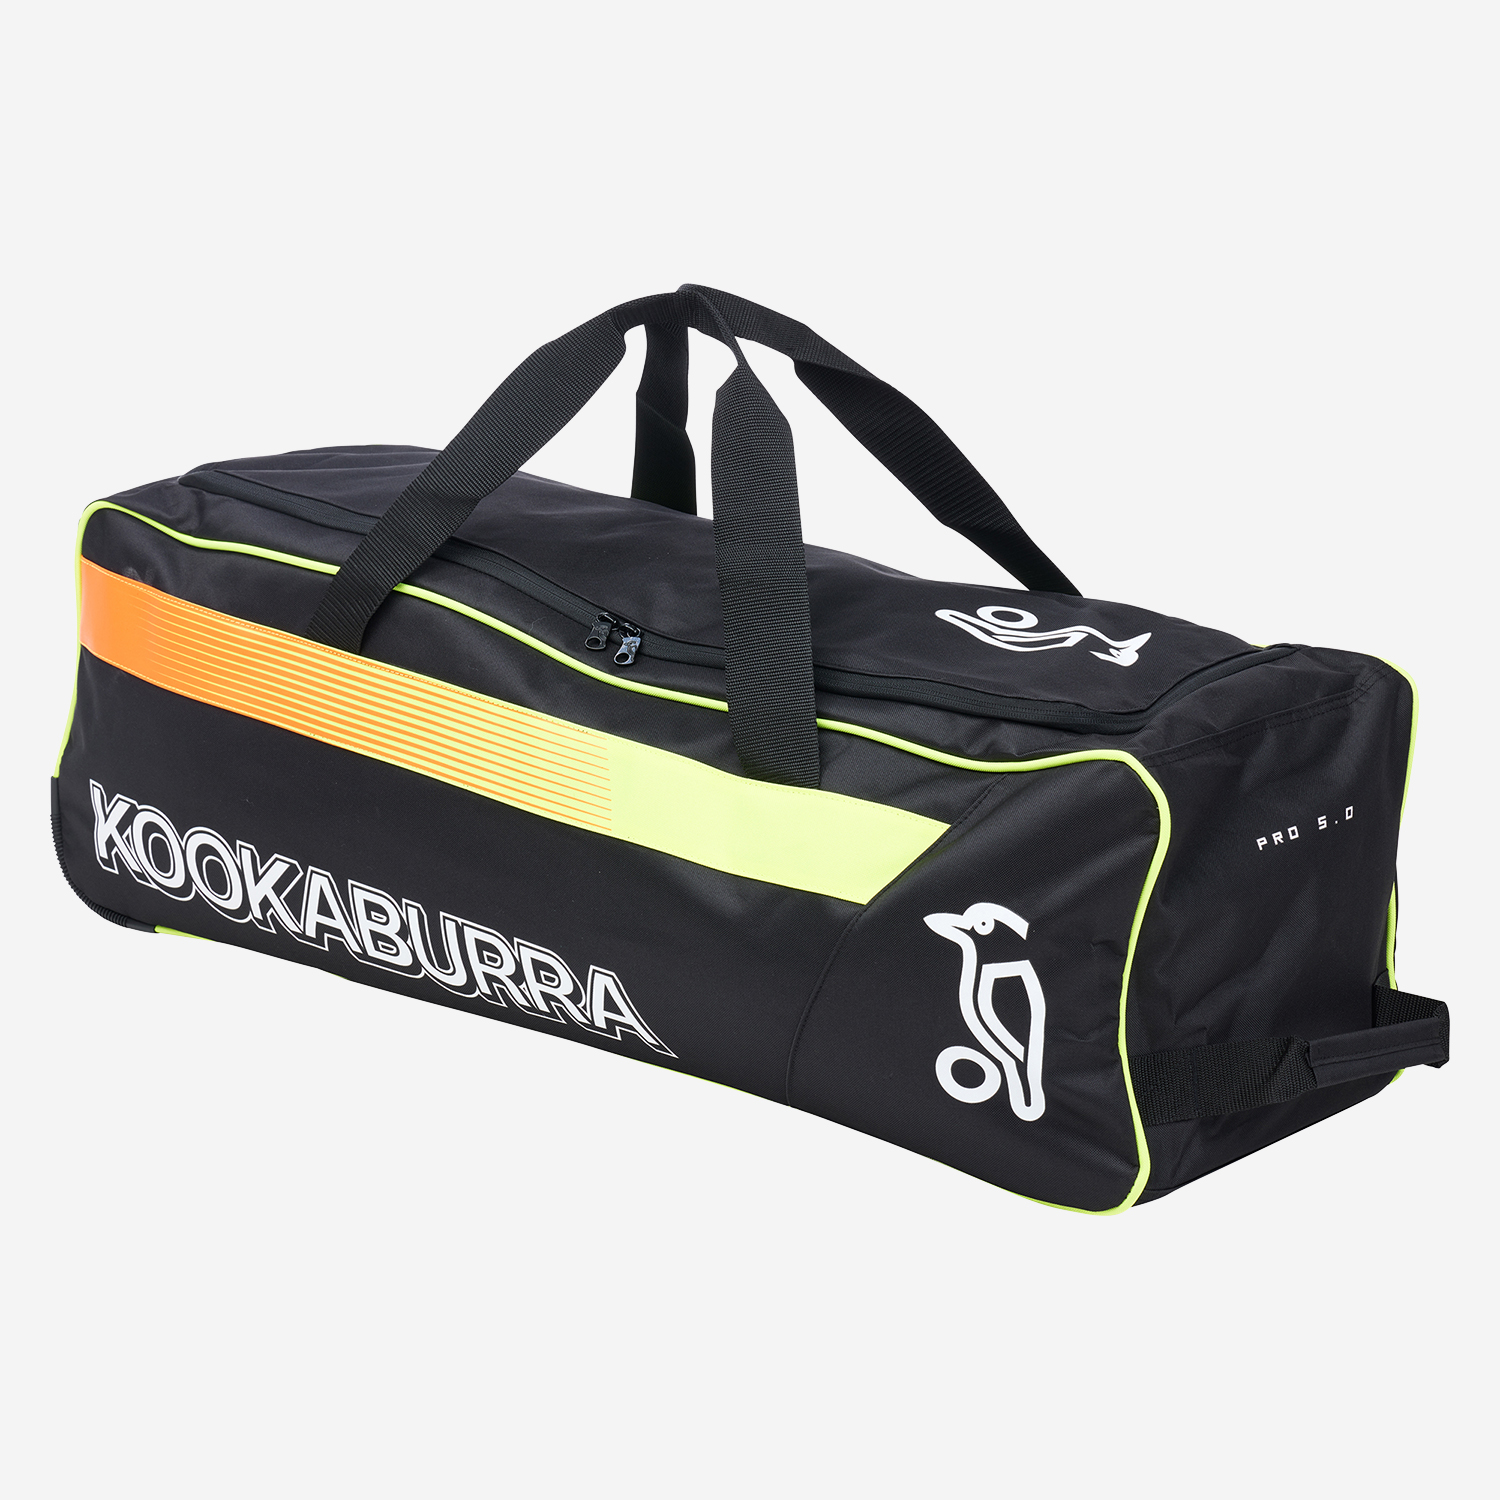 Pro 5.0 Cricket Wheelie Bags